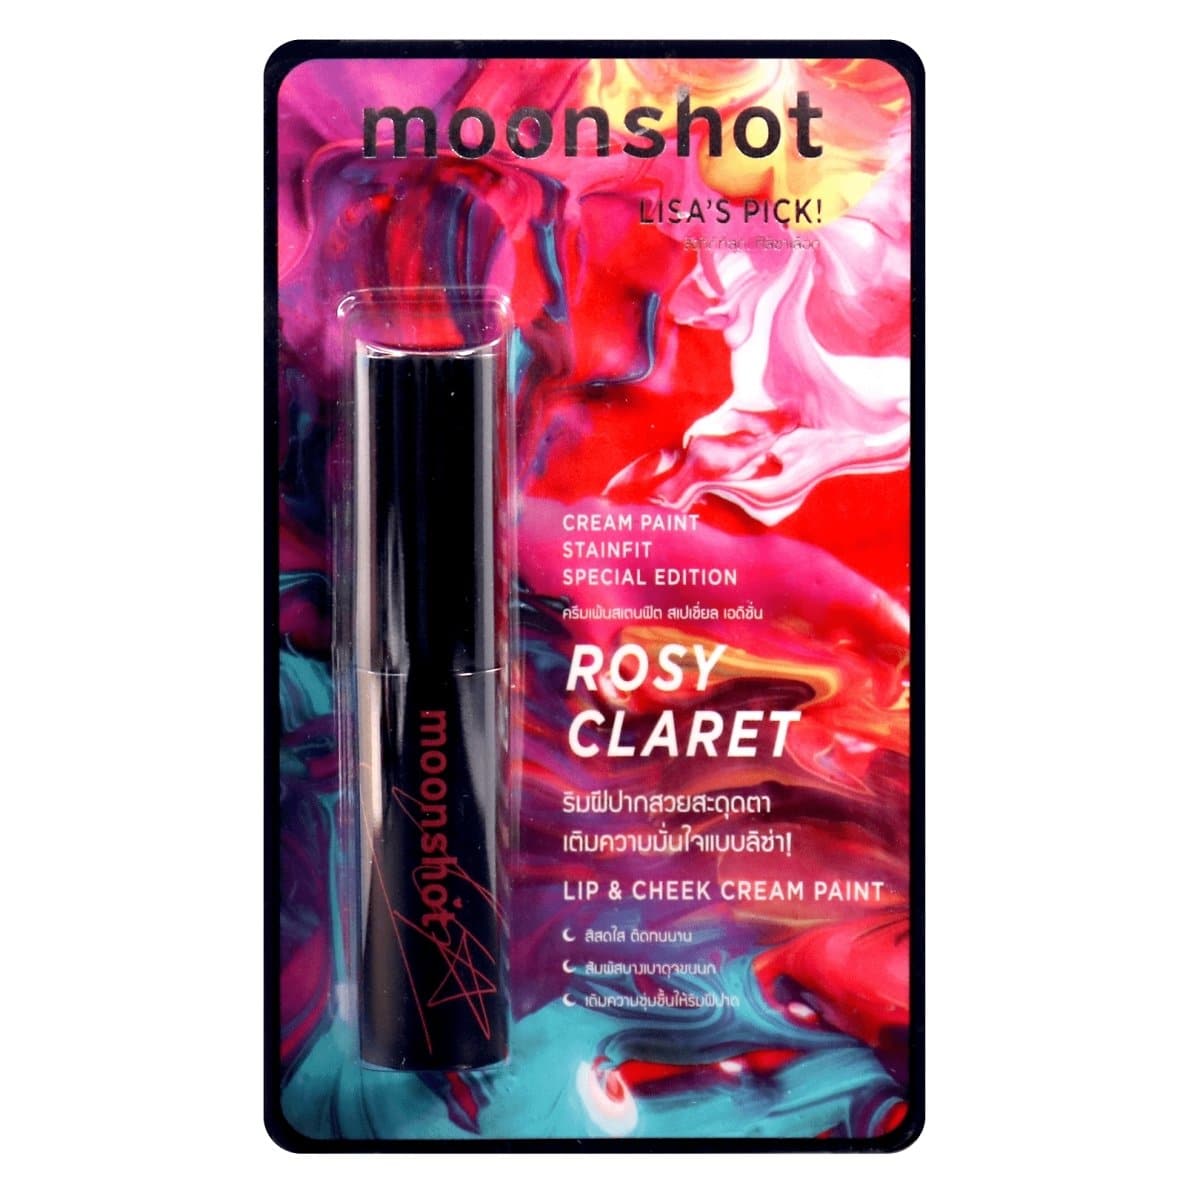 moonshot [Lisa's Pick] Cream Paint Stainfit Special Edition - Daebak